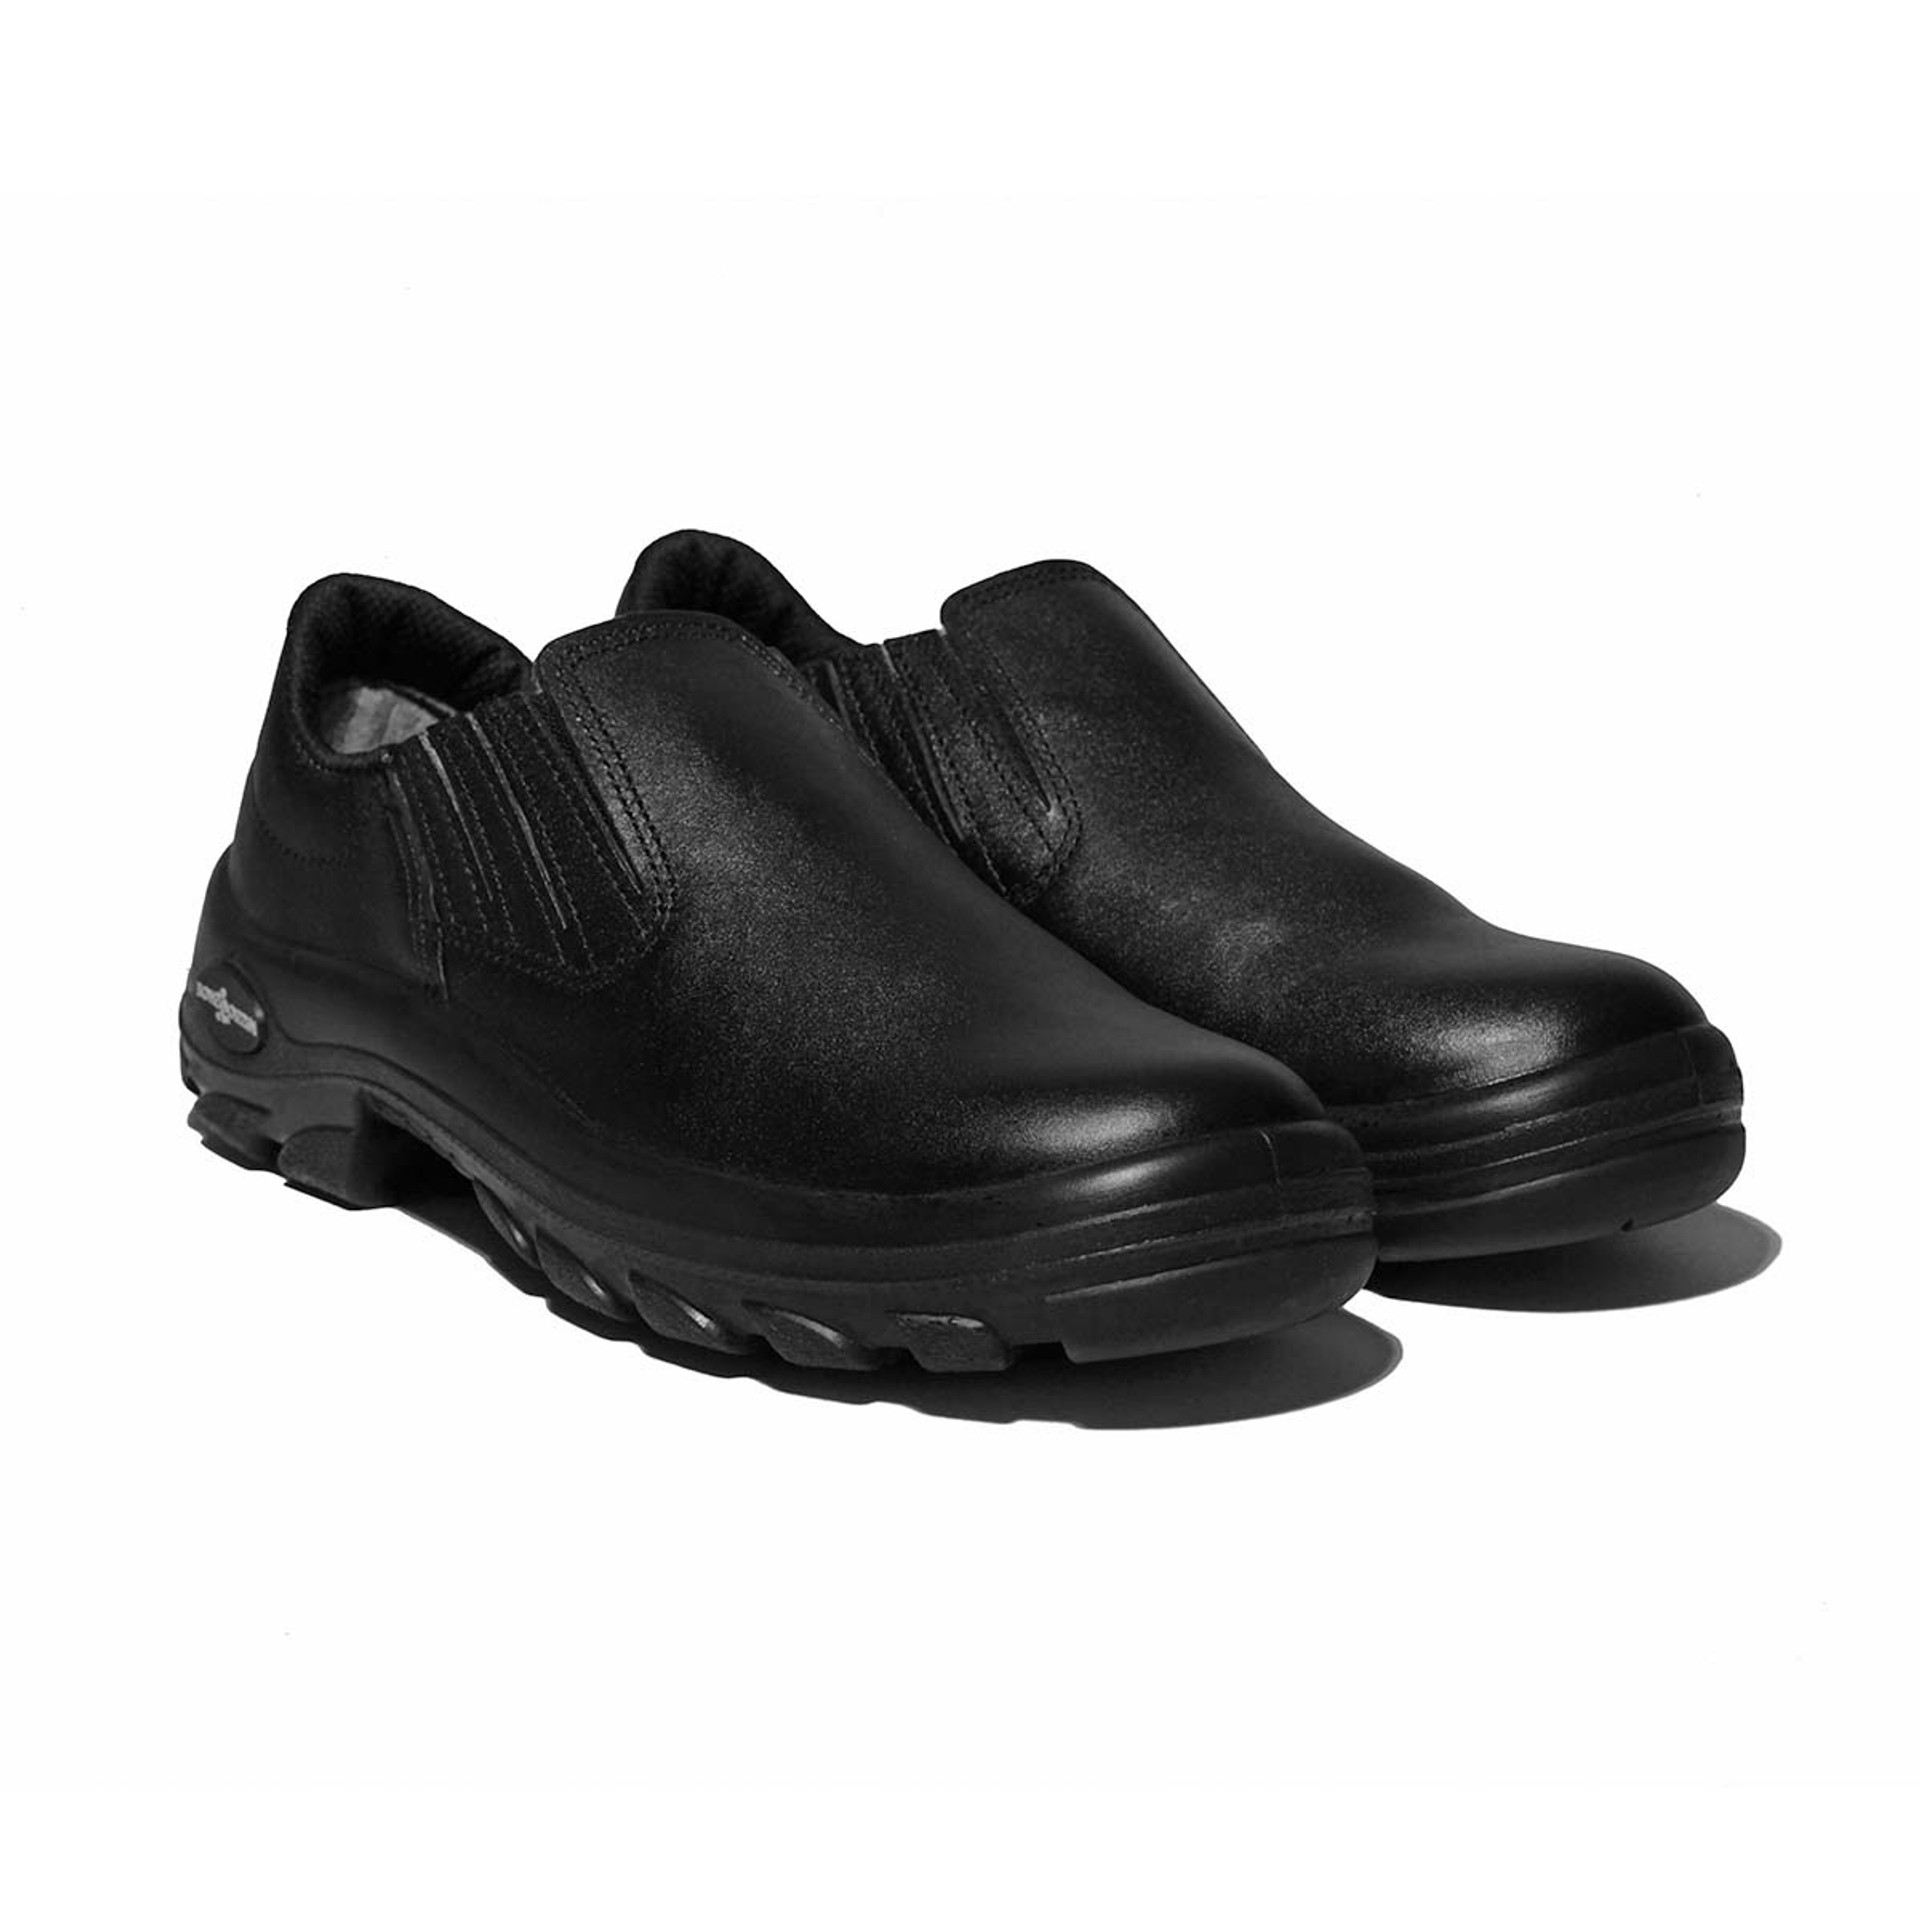 MissionShoe | Durable Dress Shoes for LDS Missionary Men